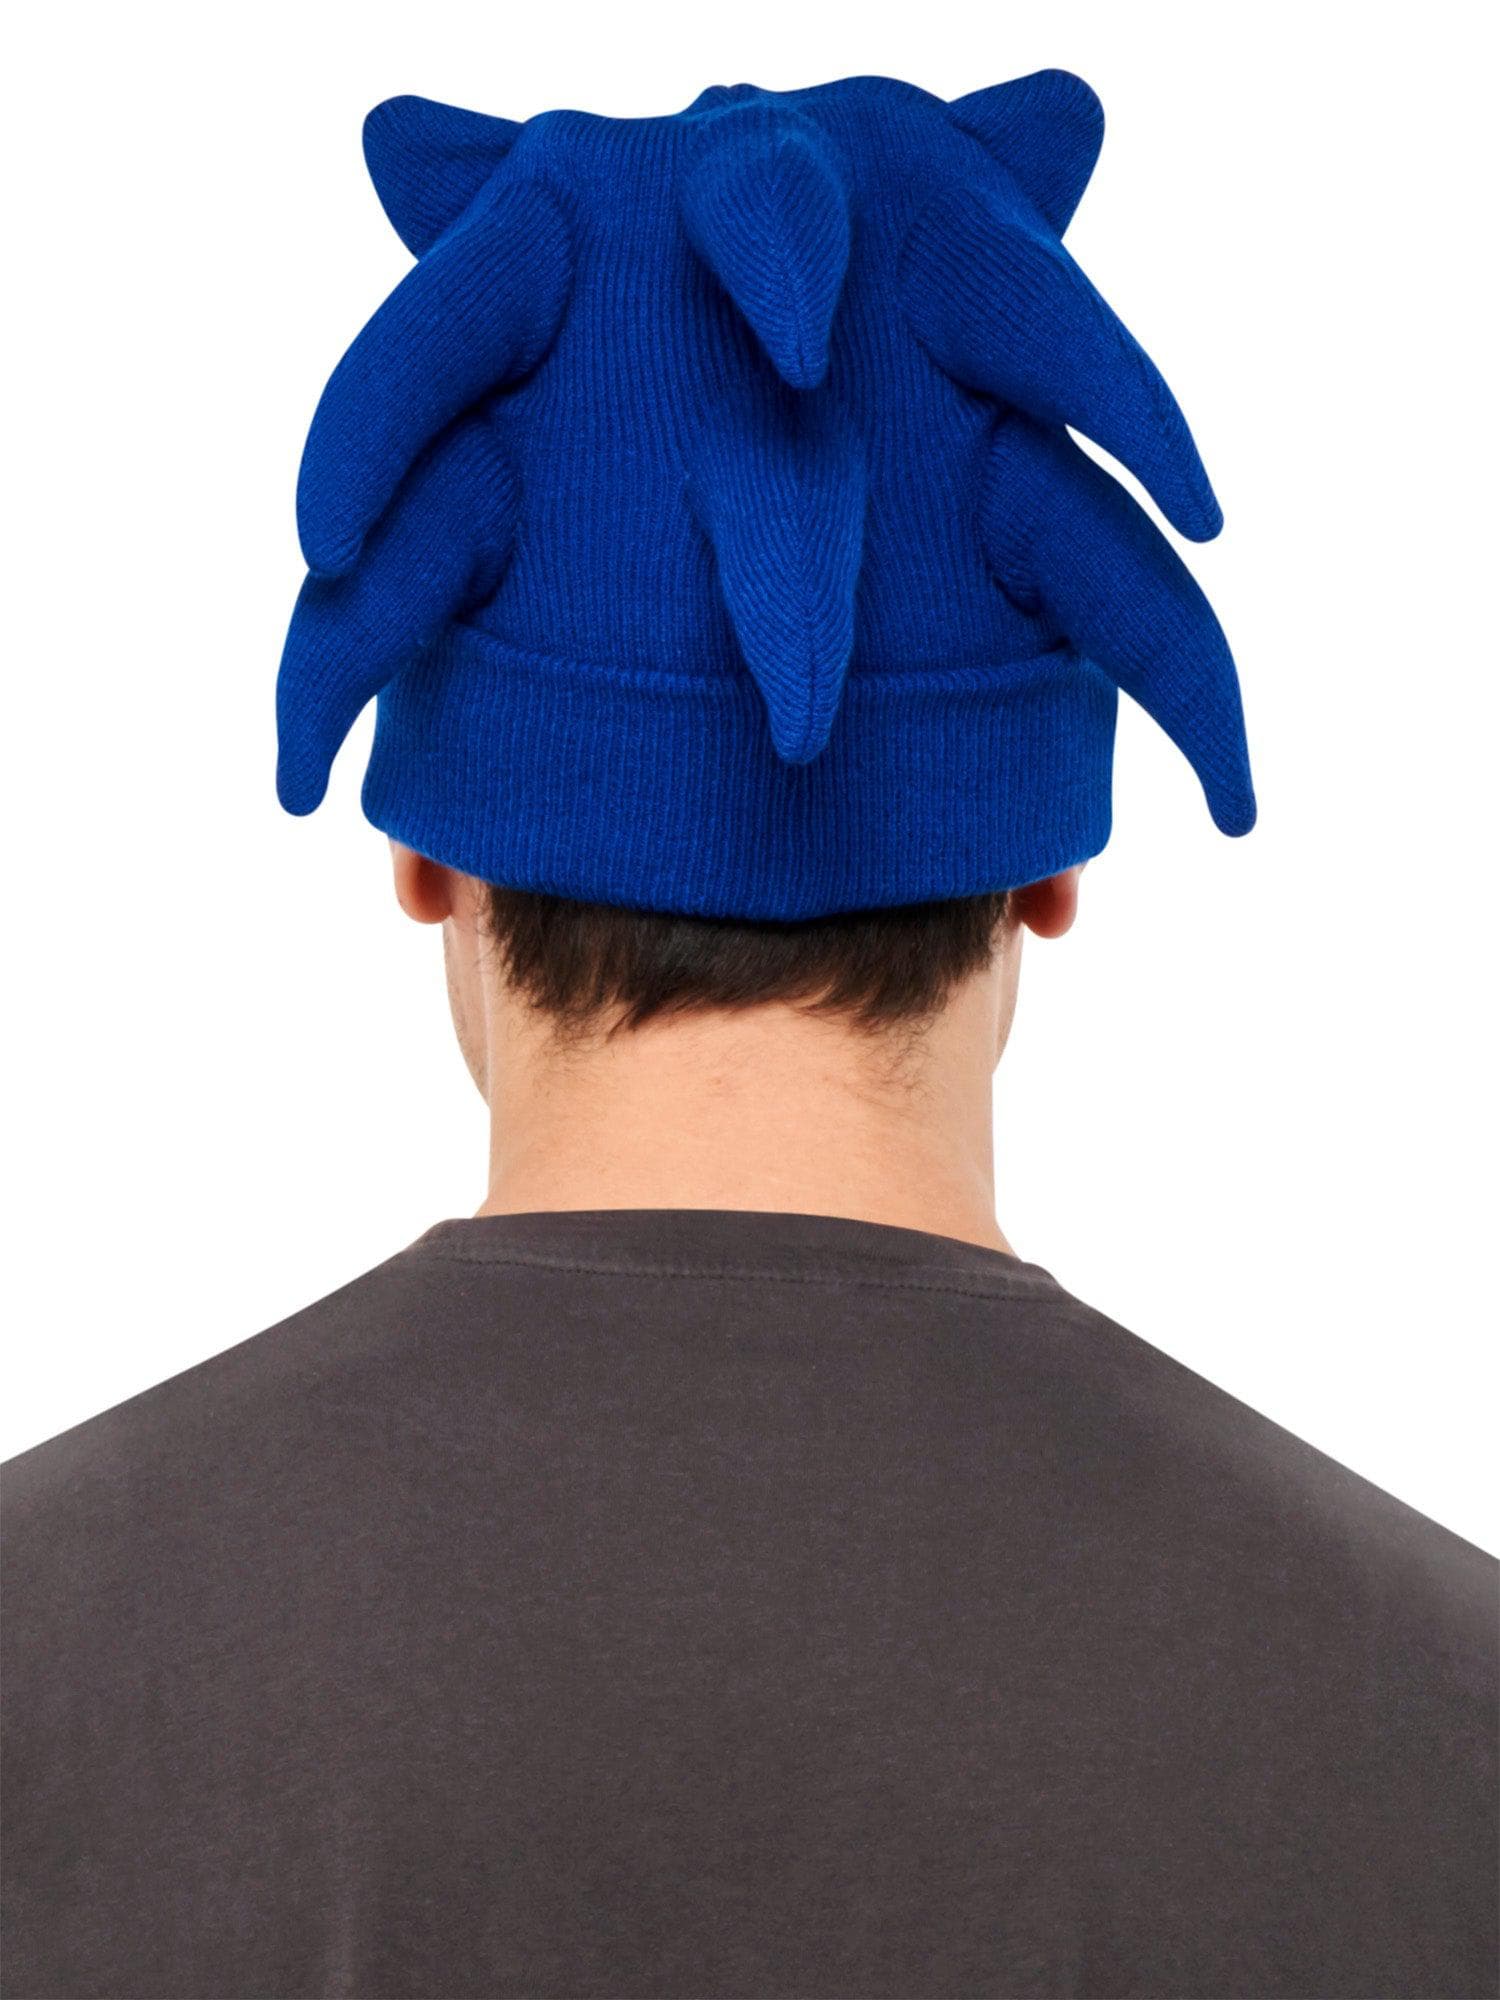 Adult Blue Knit Sonic Hat - costumes.com